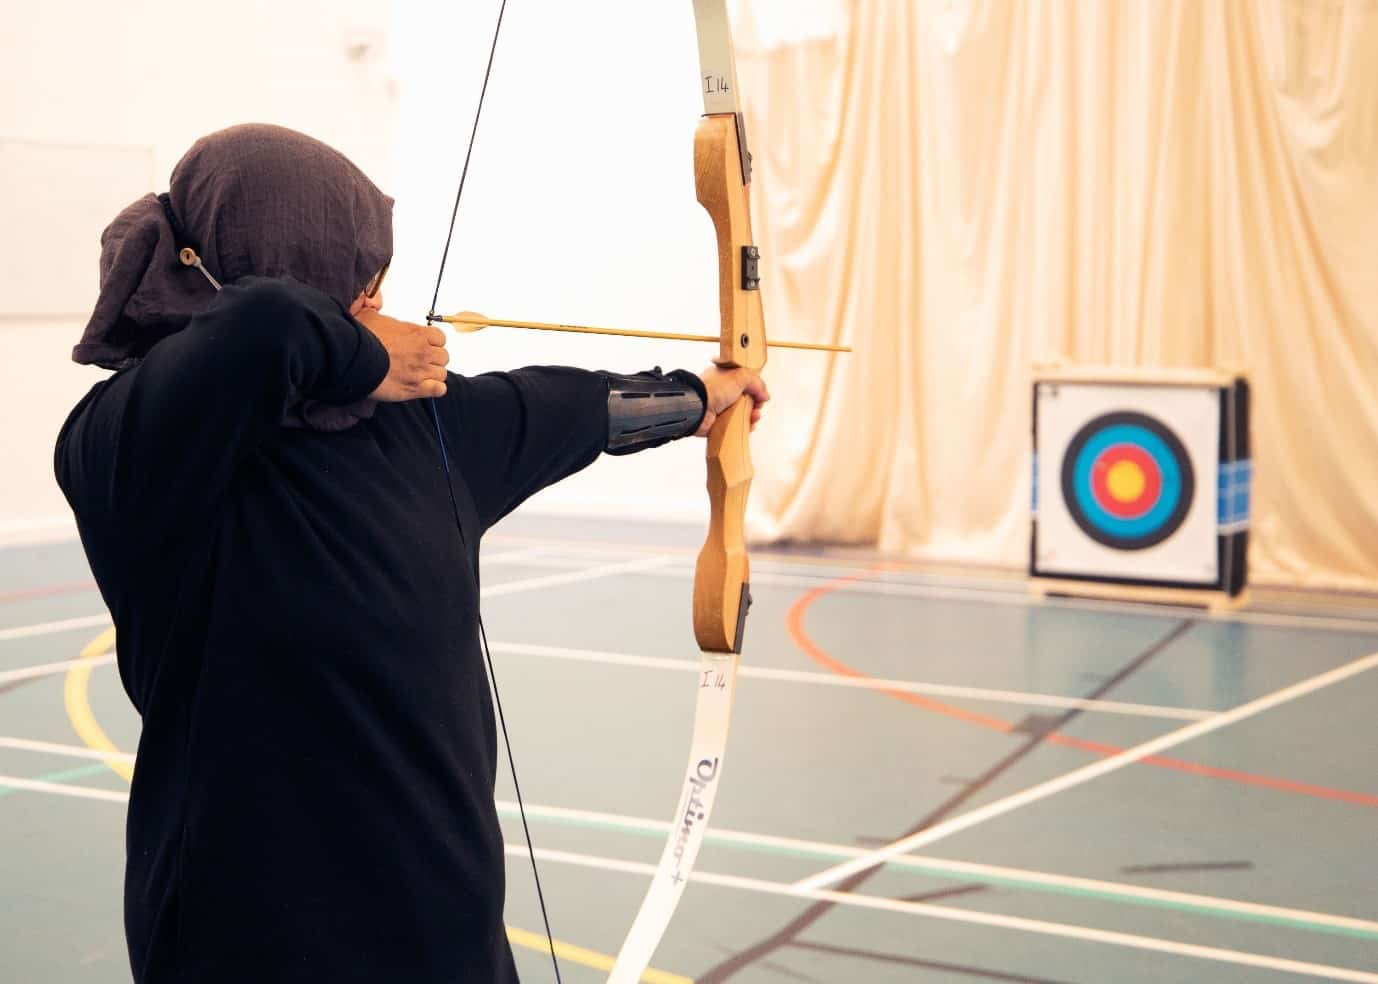 Archery GB receives £100k to break down barriers to sport